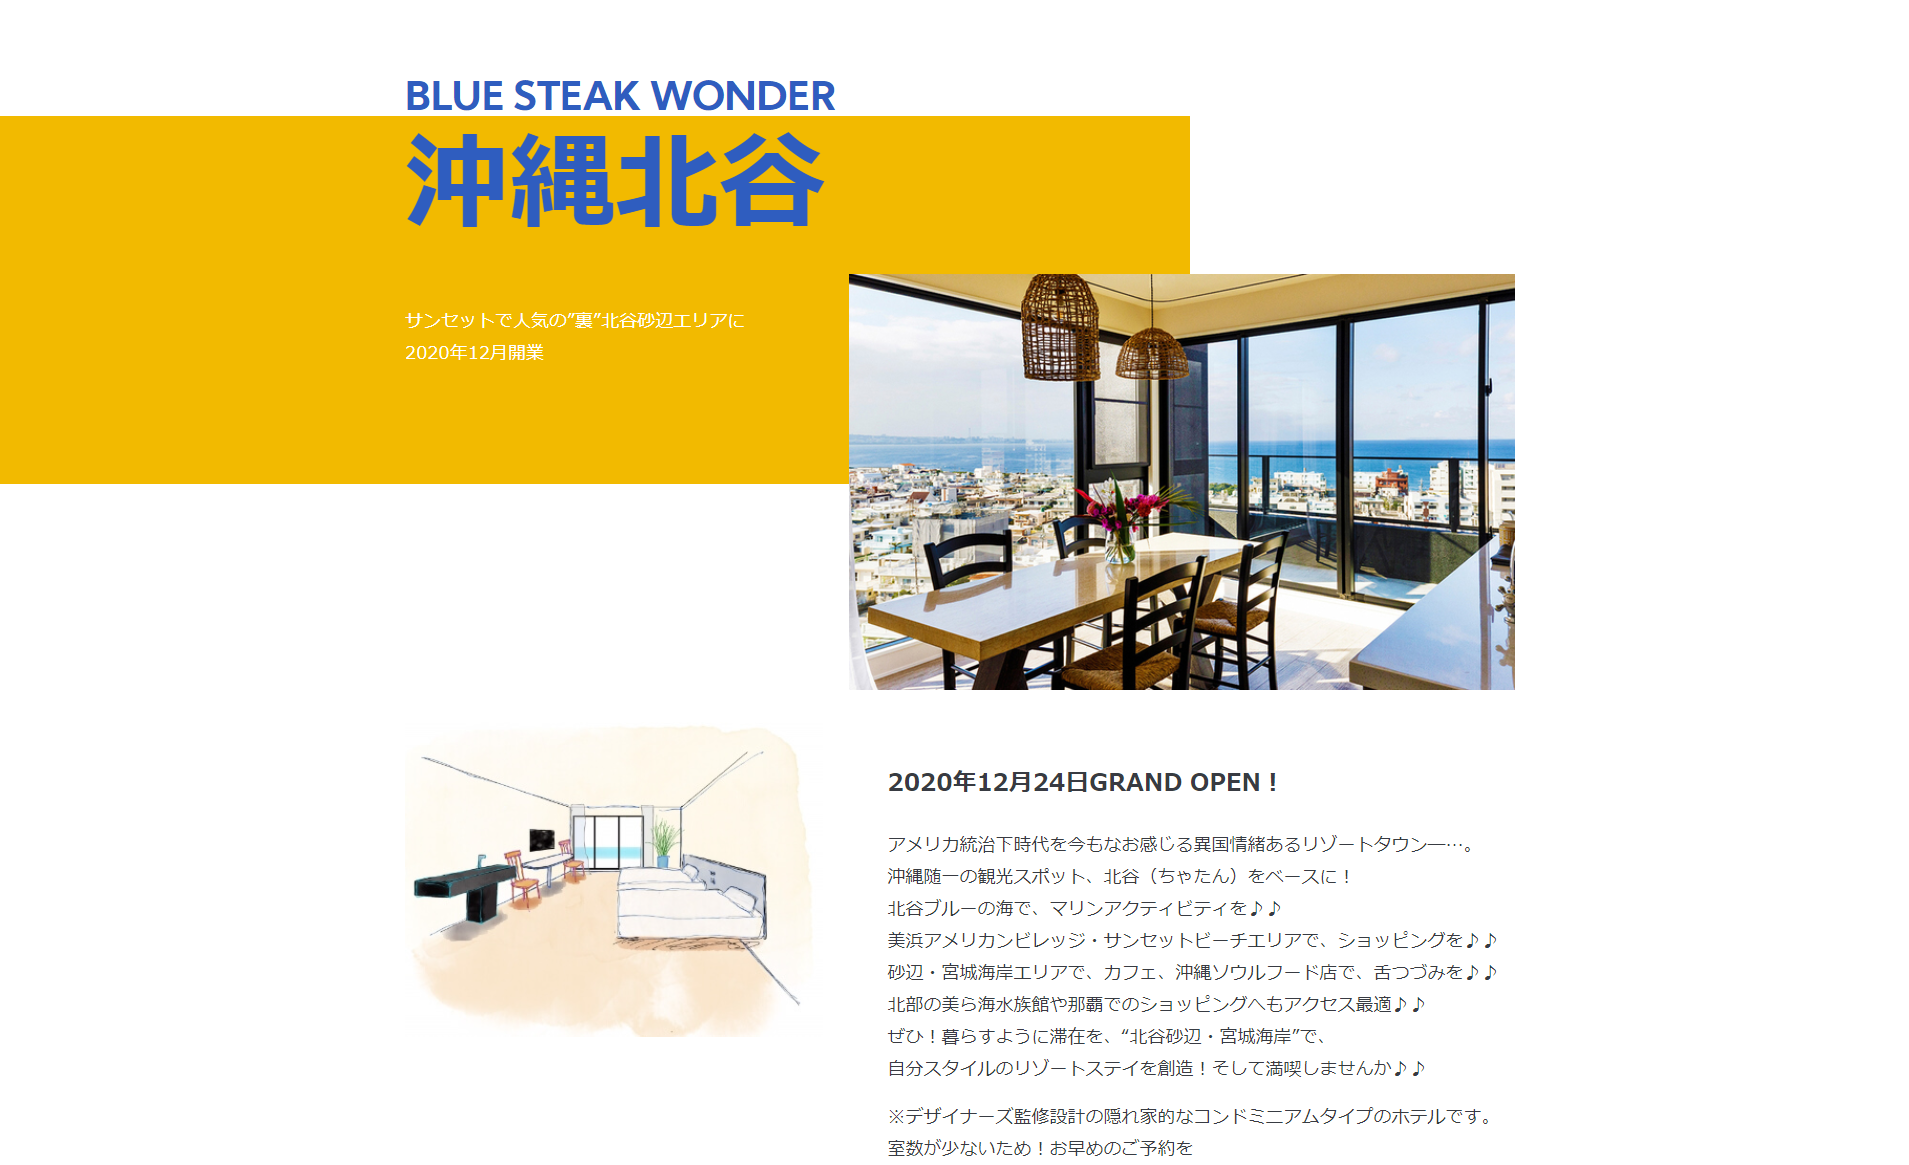 BLUE STEAK WONDER様ホテルサイト